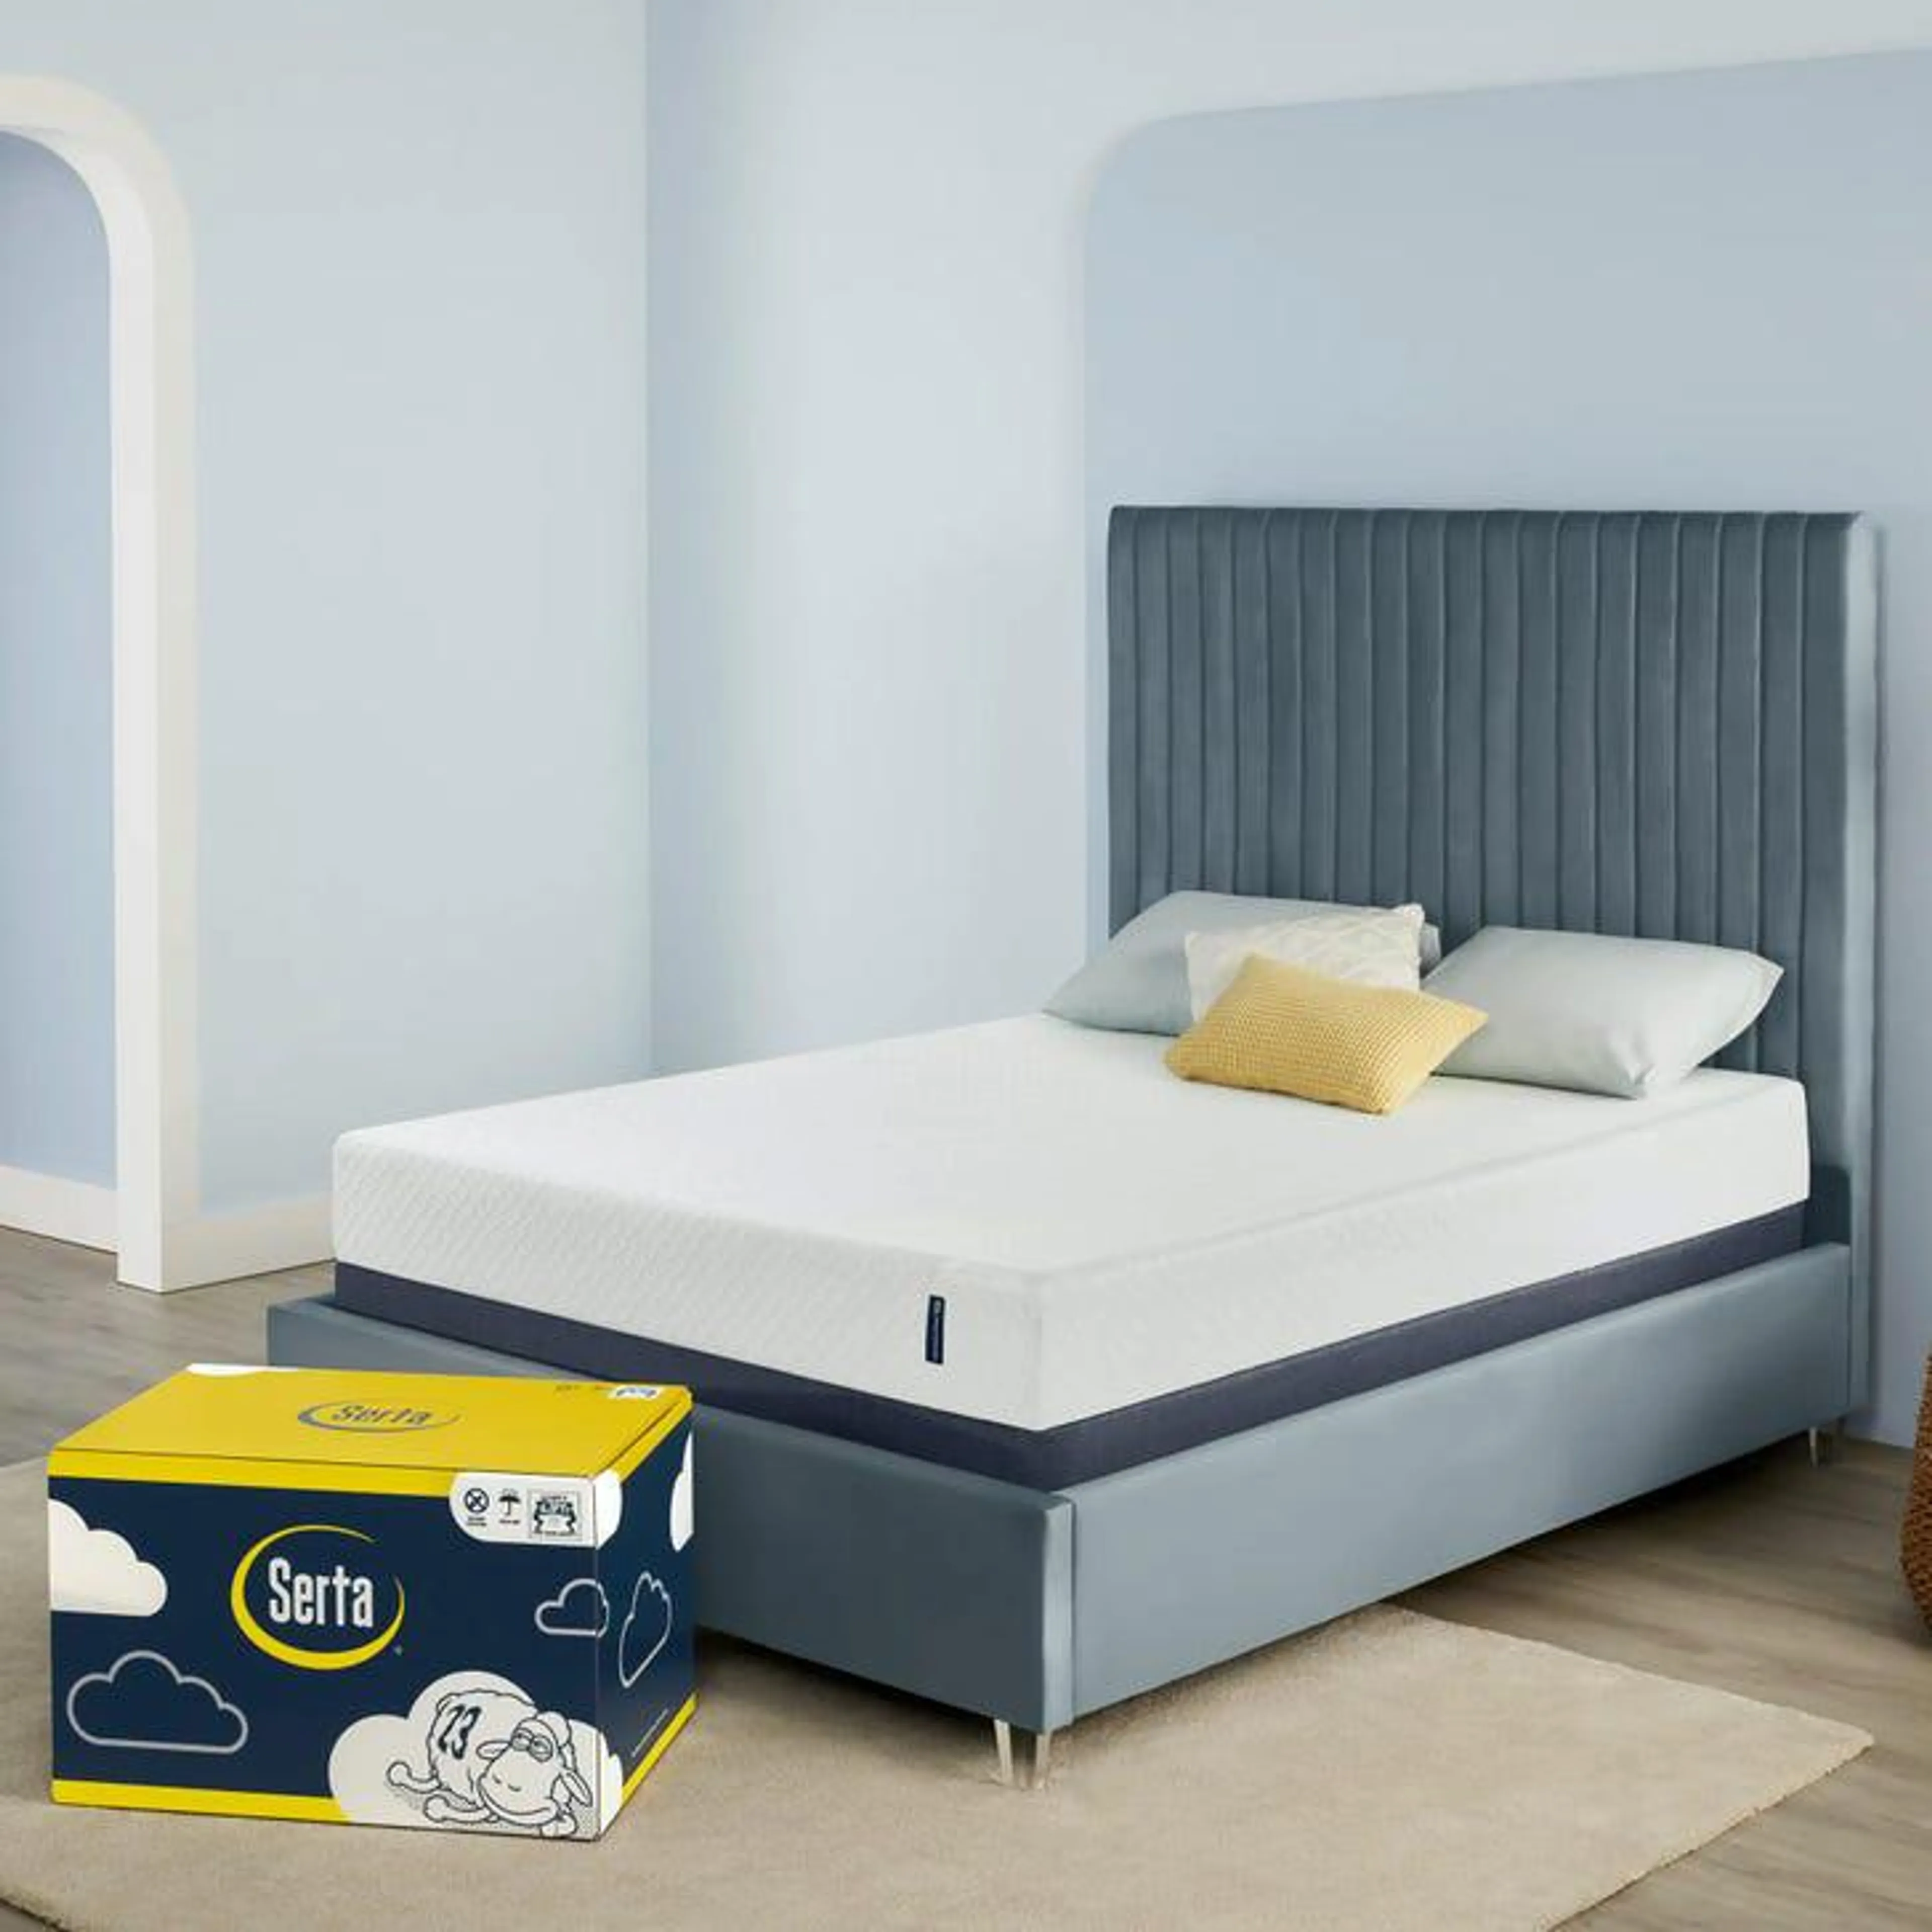 Queen Serta EZ Tote Sheer Slumber 8 Inch Firm Bed in a Box Mattress